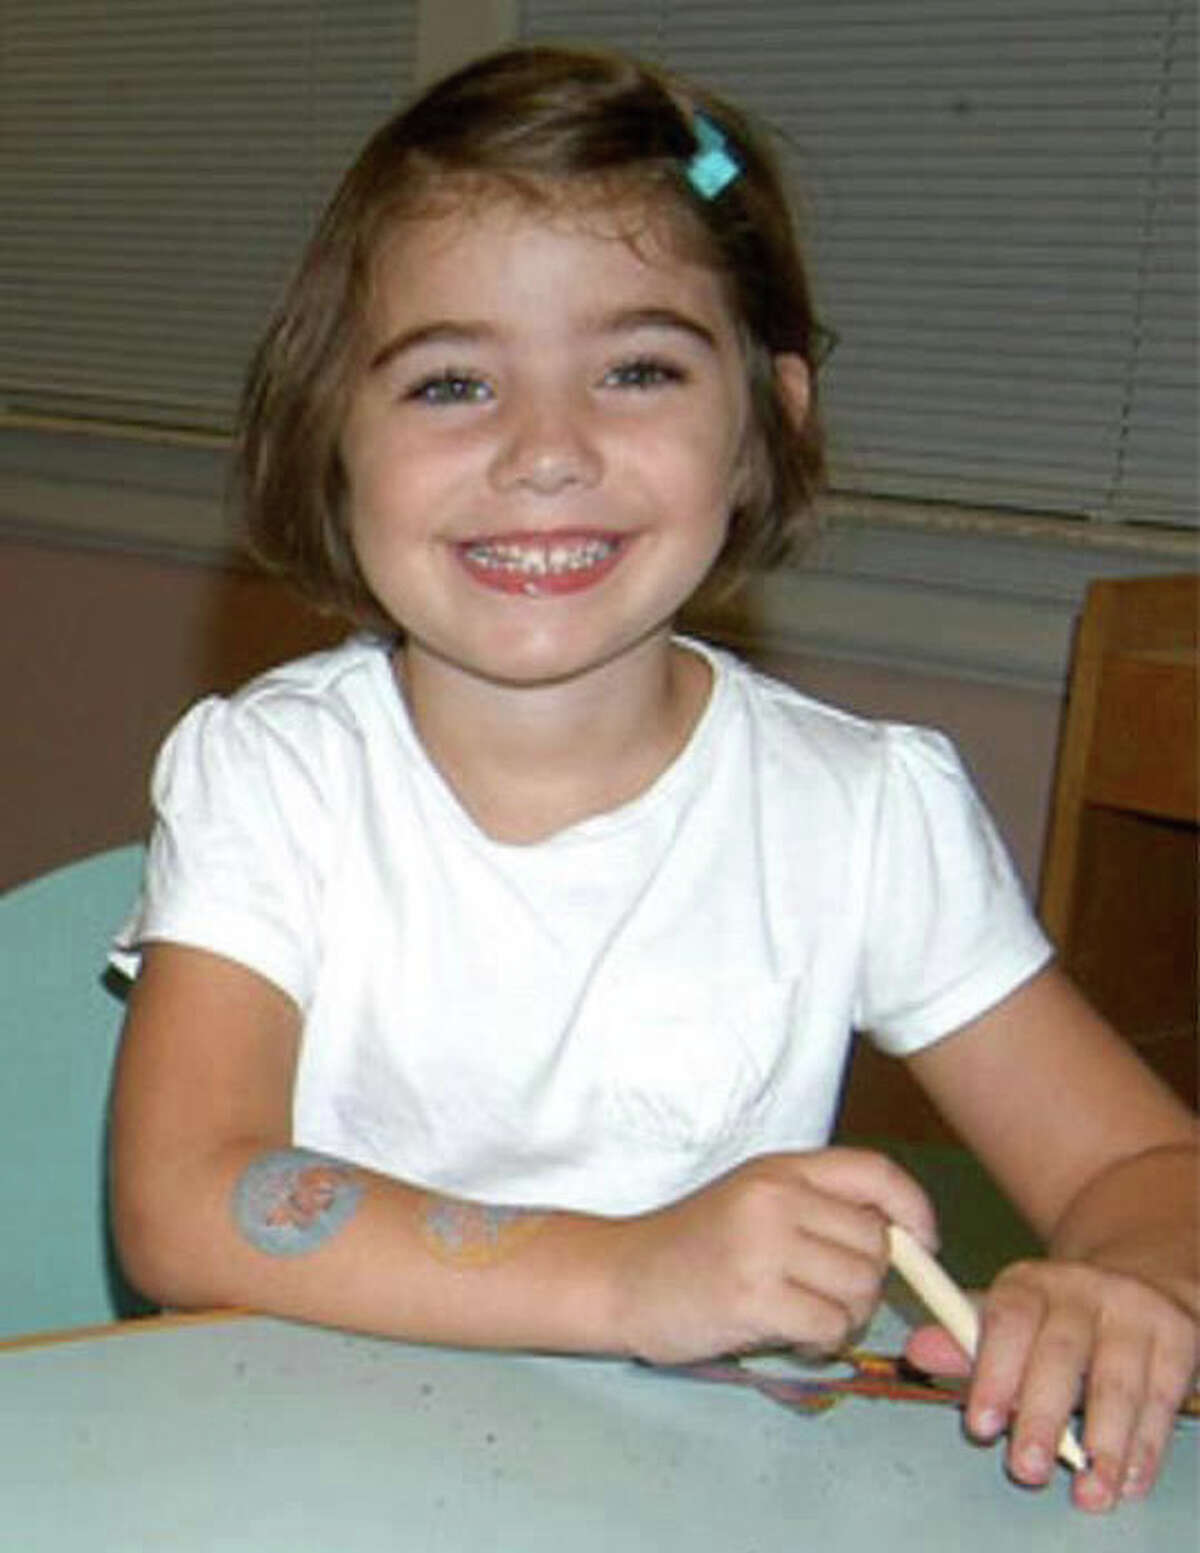 Caroline Previdi died in the Sandy Hook Elementary School shooting in Newtown, Conn. on Friday, Dec. 14, 2012.